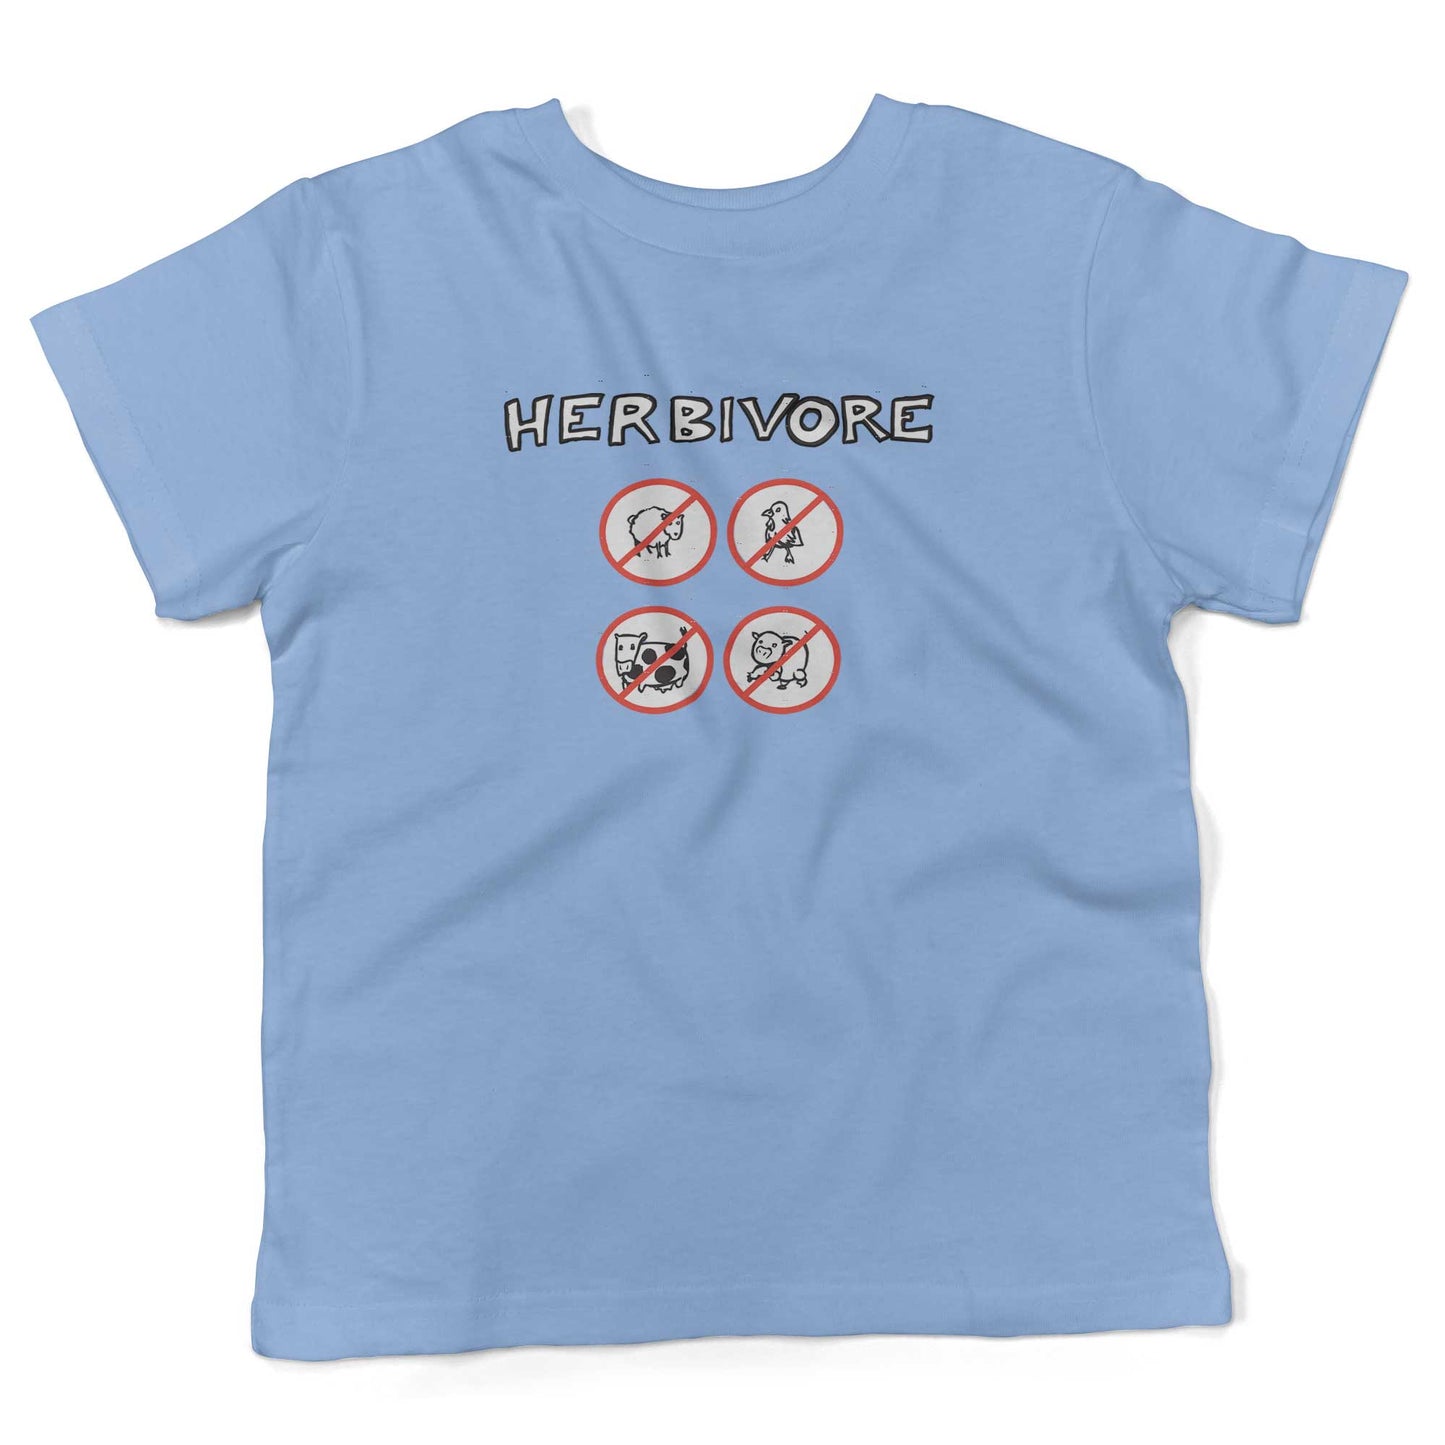 Herbivore Toddler Shirt-Organic Baby Blue-2T